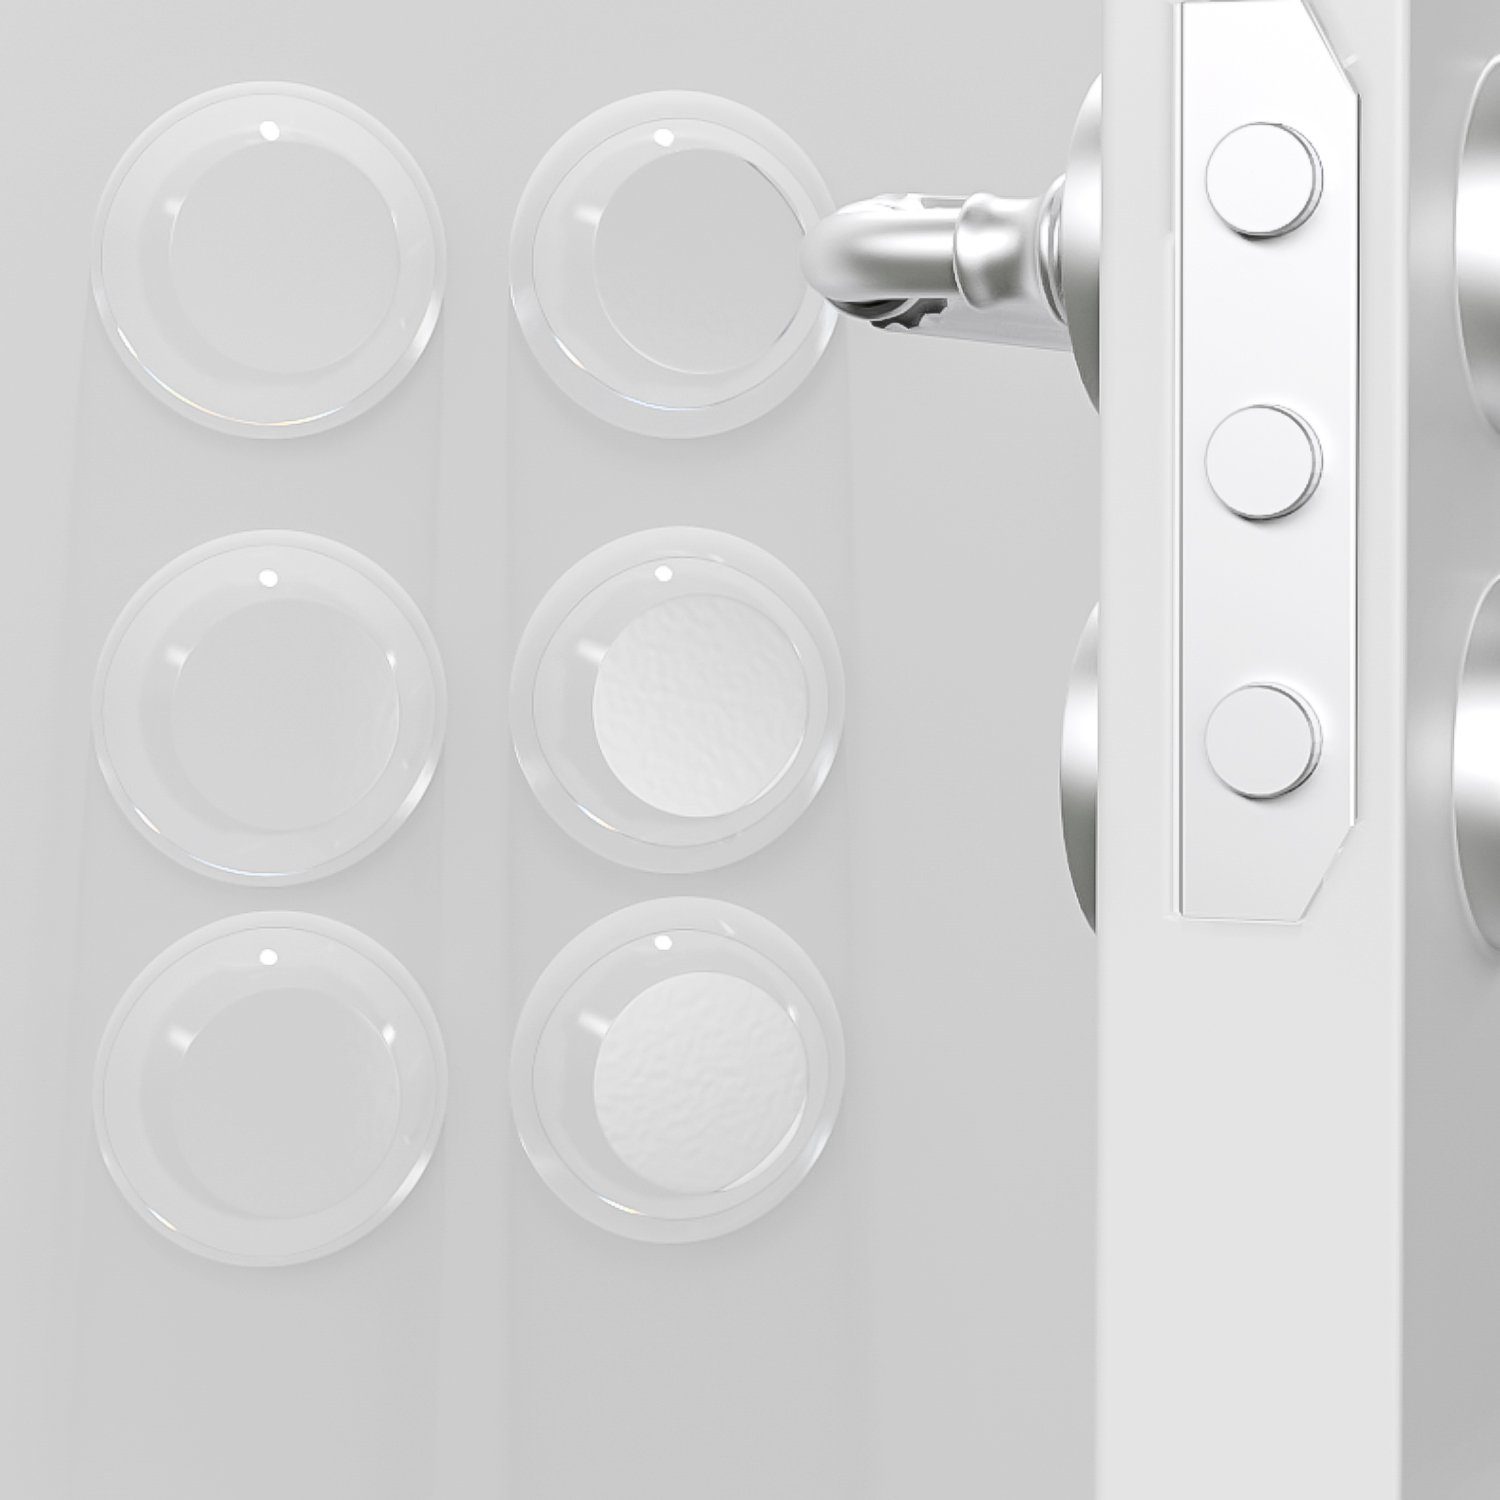 Ailiebe Design Türstopper (6er Set, Silikon), Türpuffer Wandpuffer  Gummipuffer 42 mm transparent online kaufen | OTTO